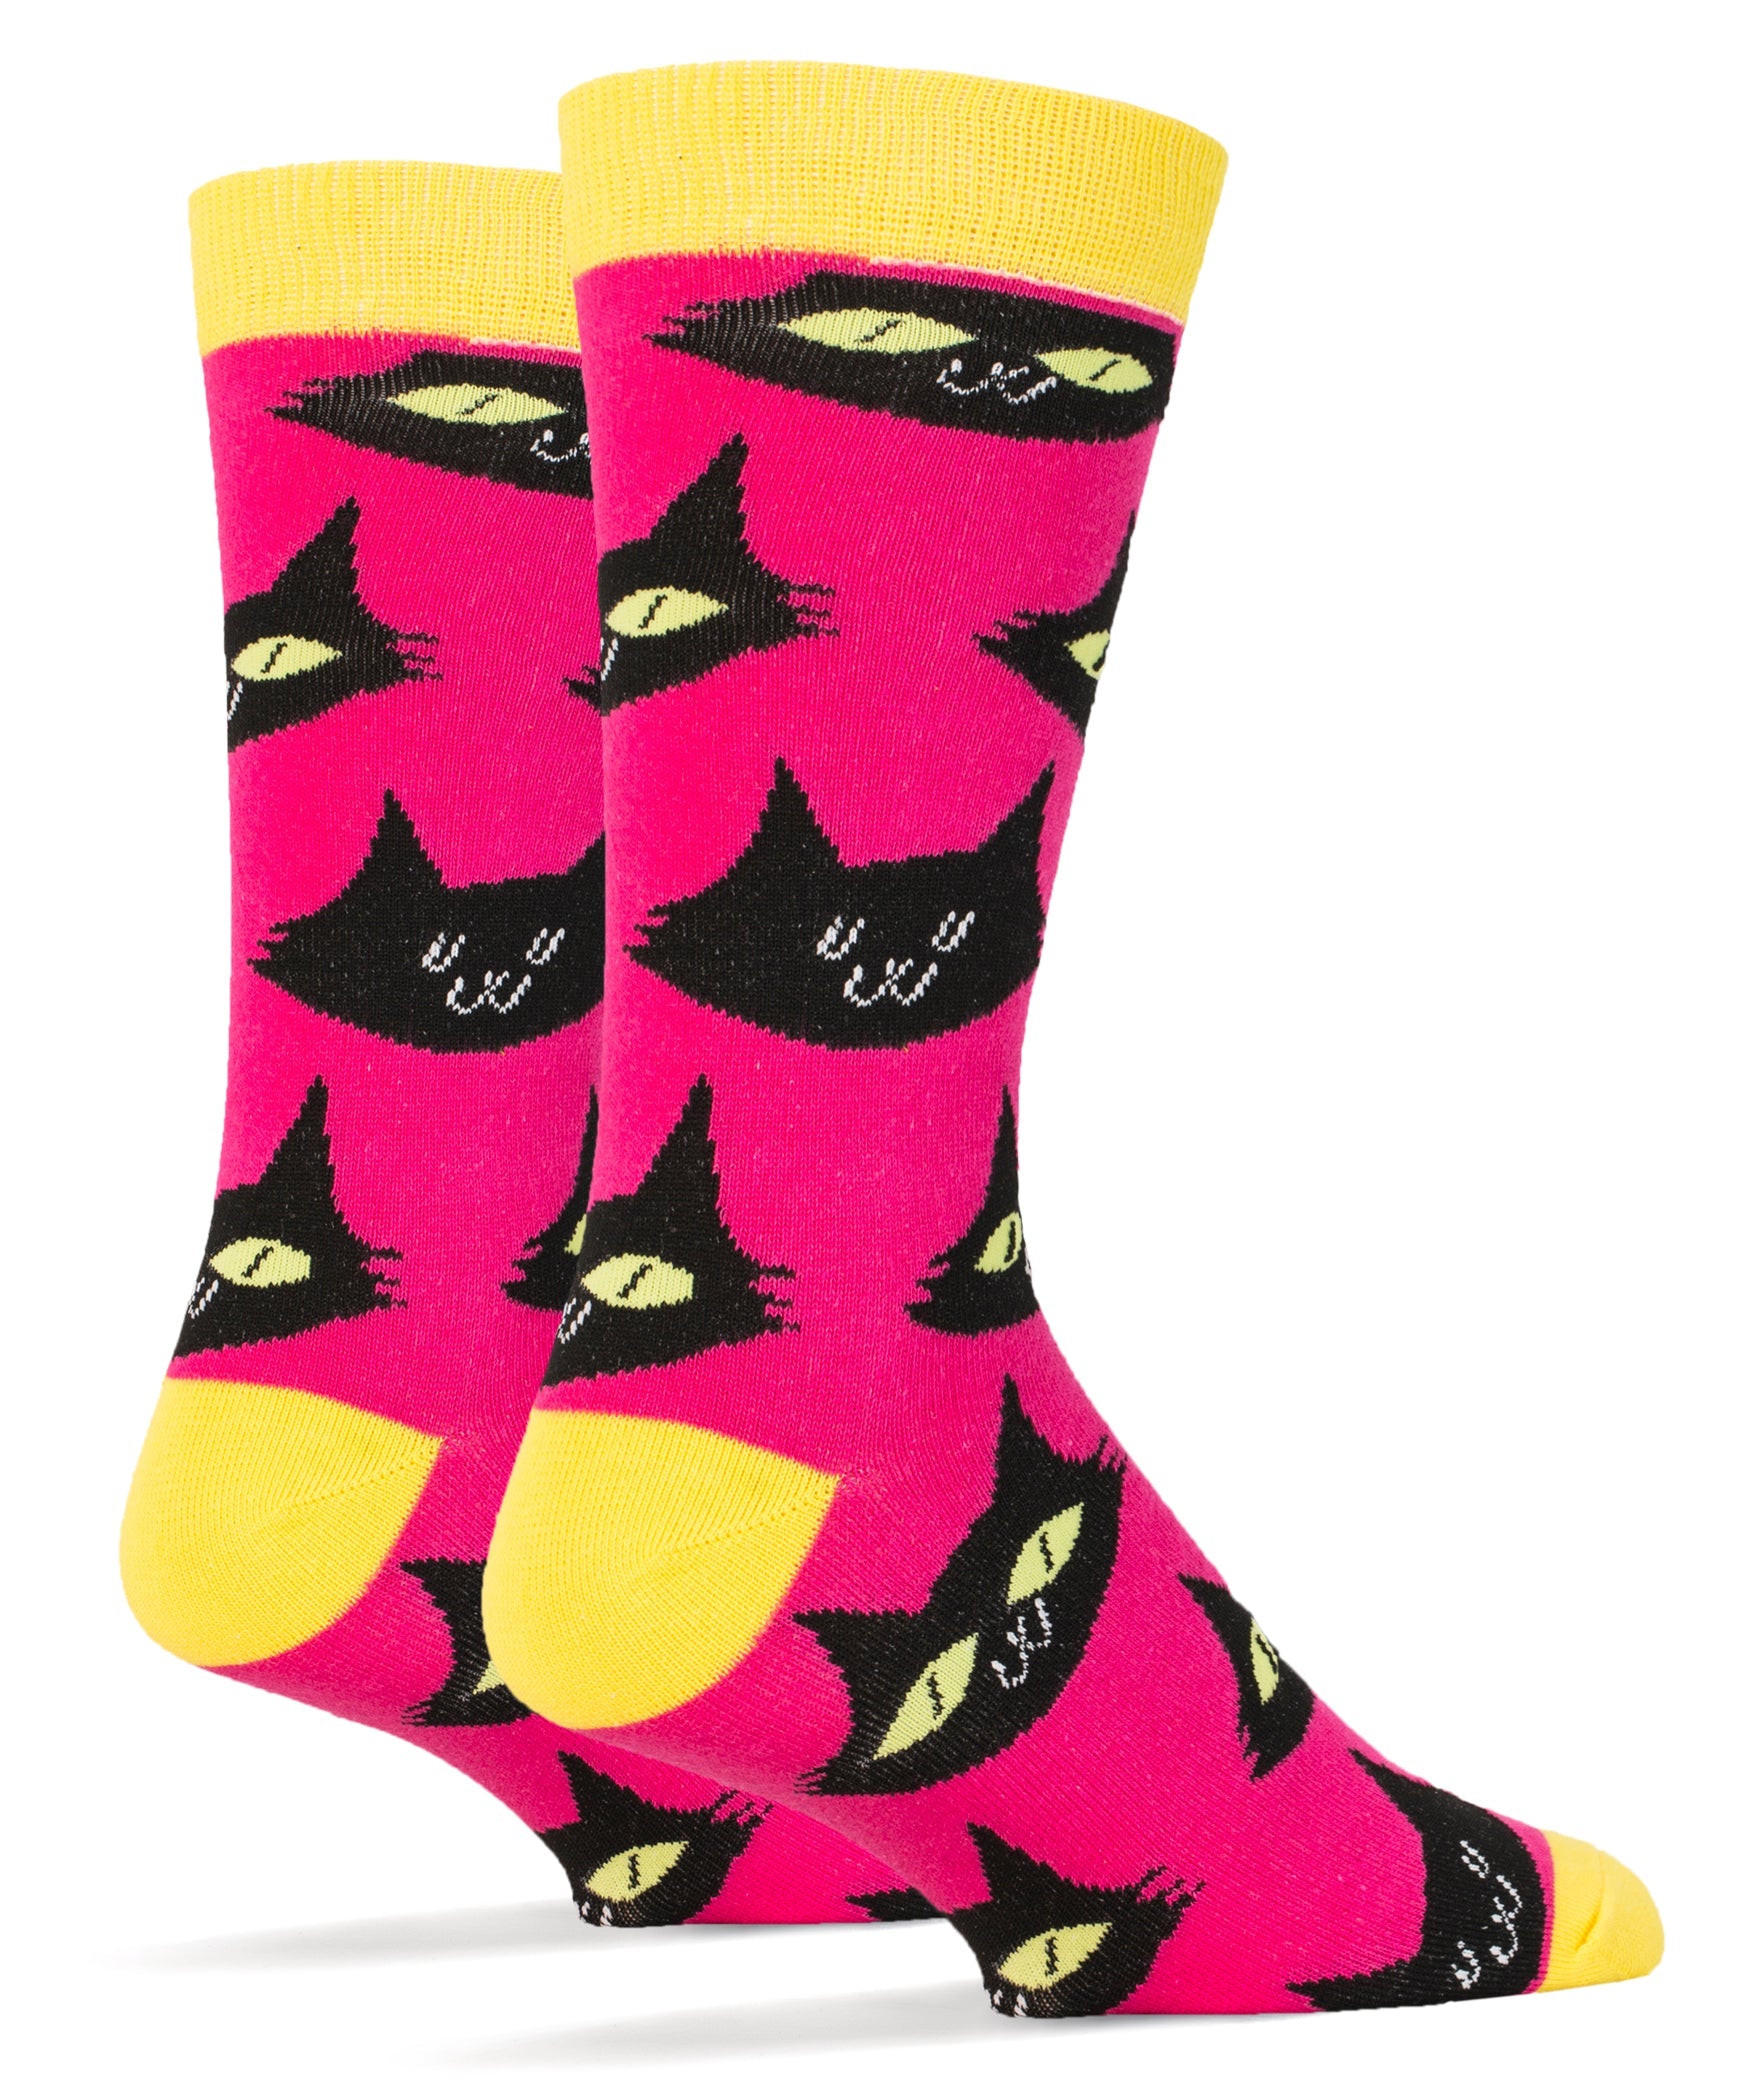 the-cats-meow-mens-crew-socks-2-oooh-yeah-socks